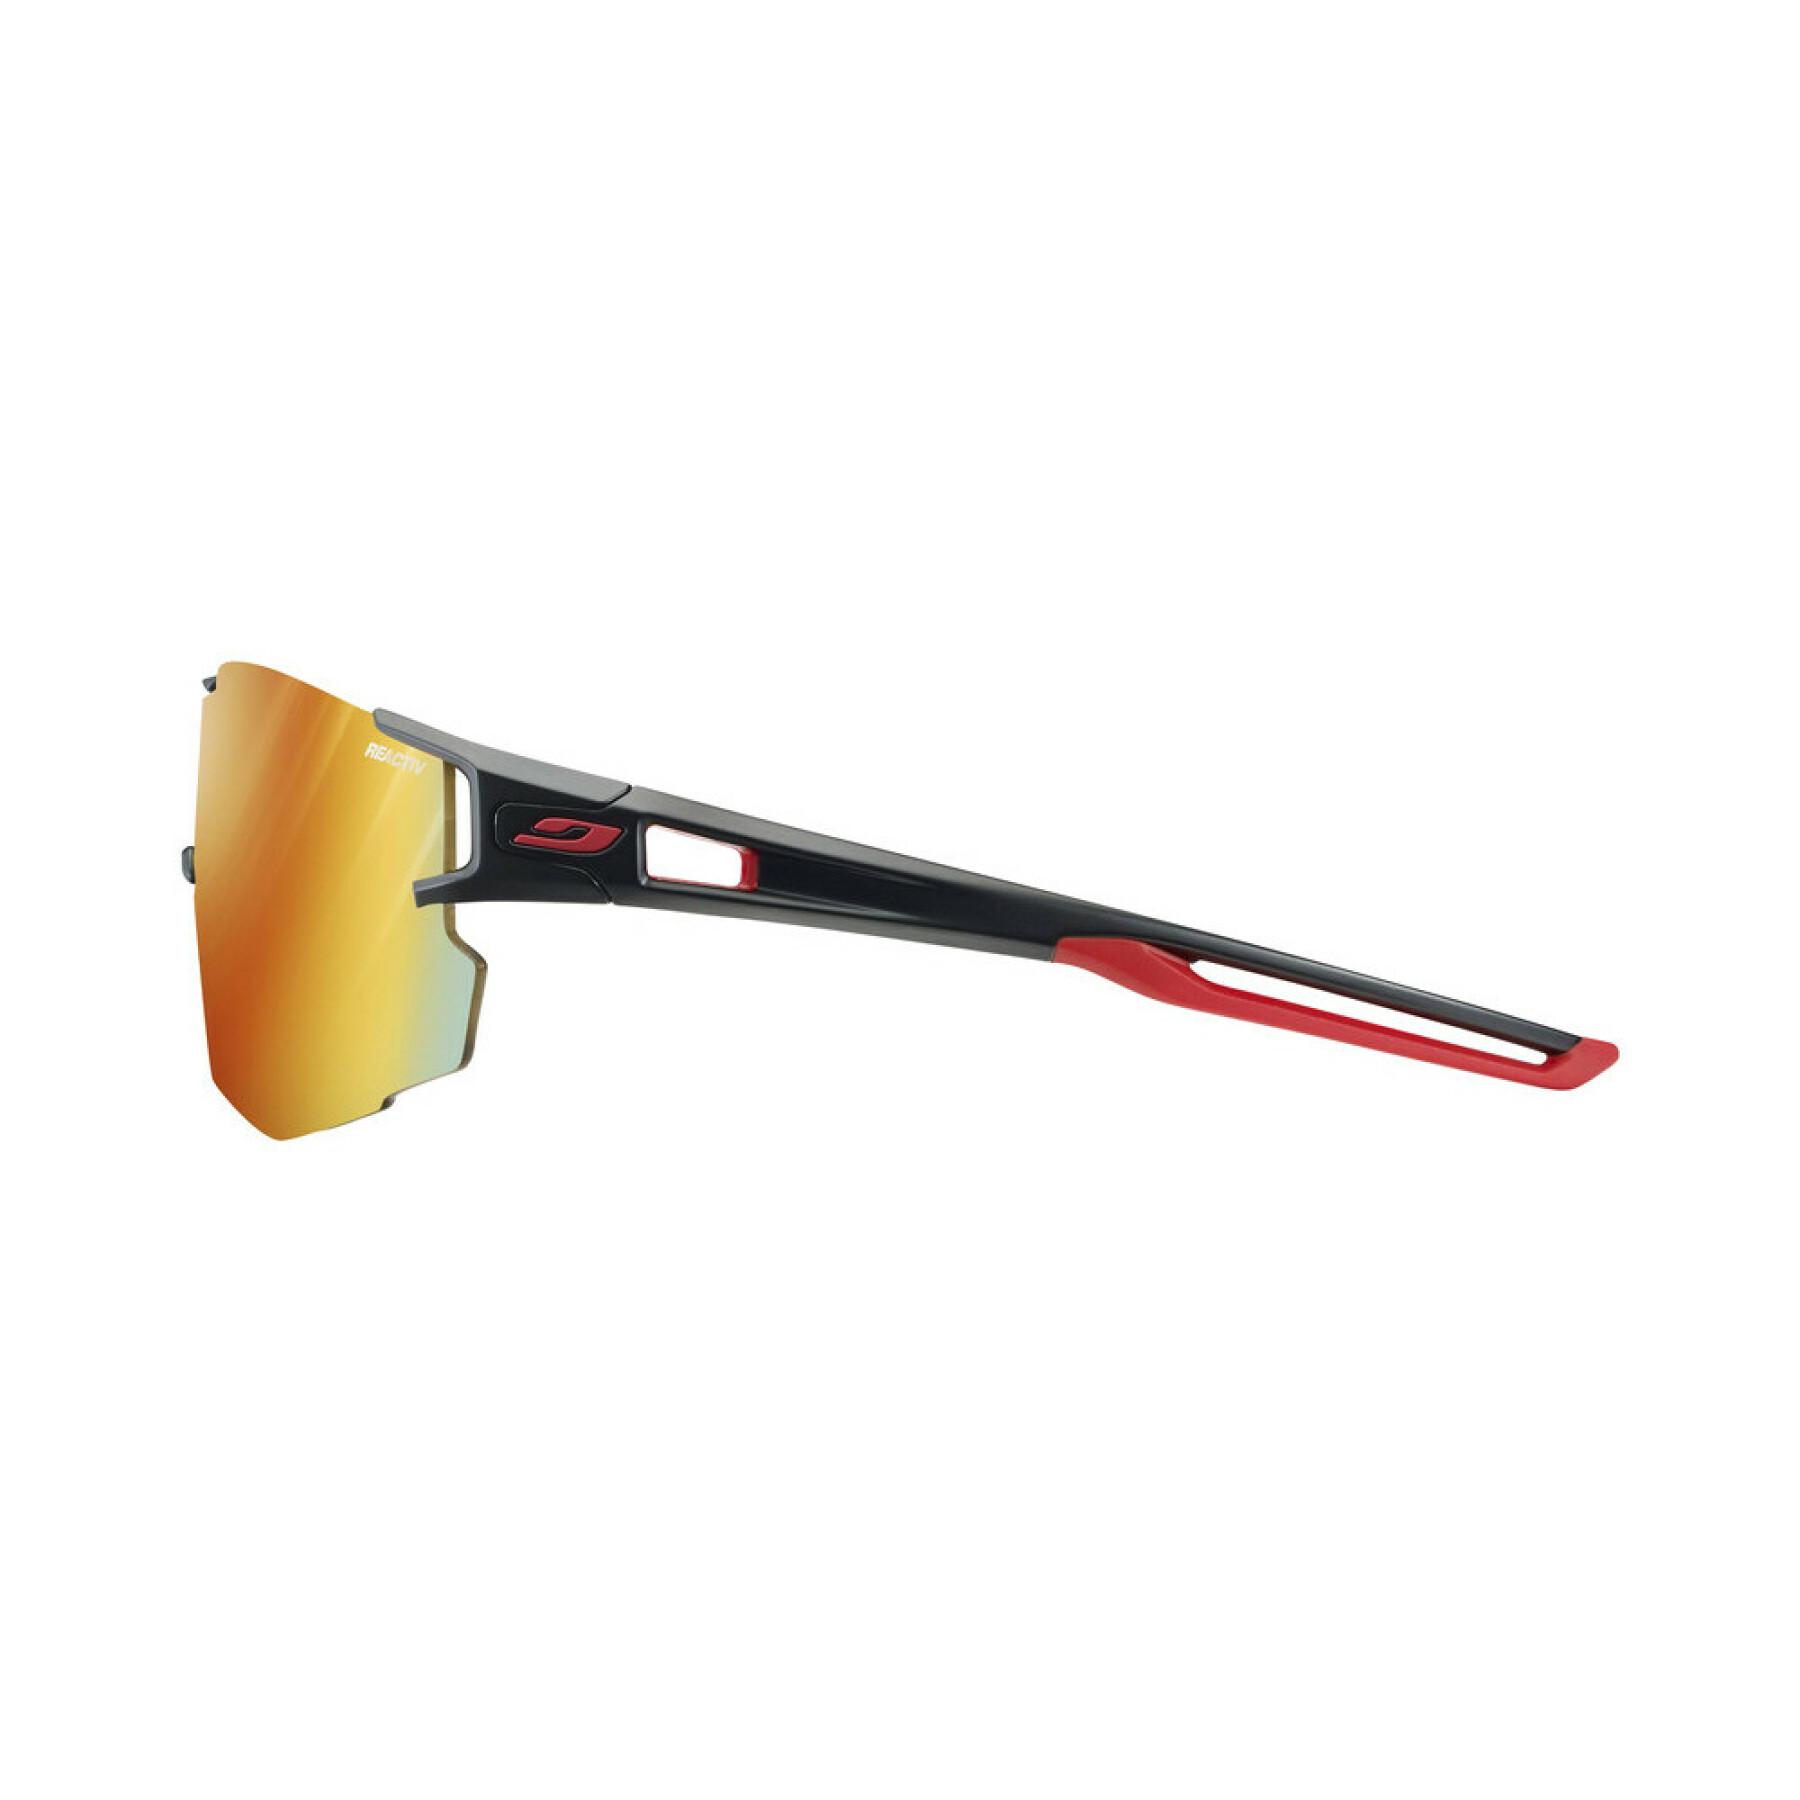 Sunglasses Julbo Aerospeed Reactiv 1-3 Light Amplifier